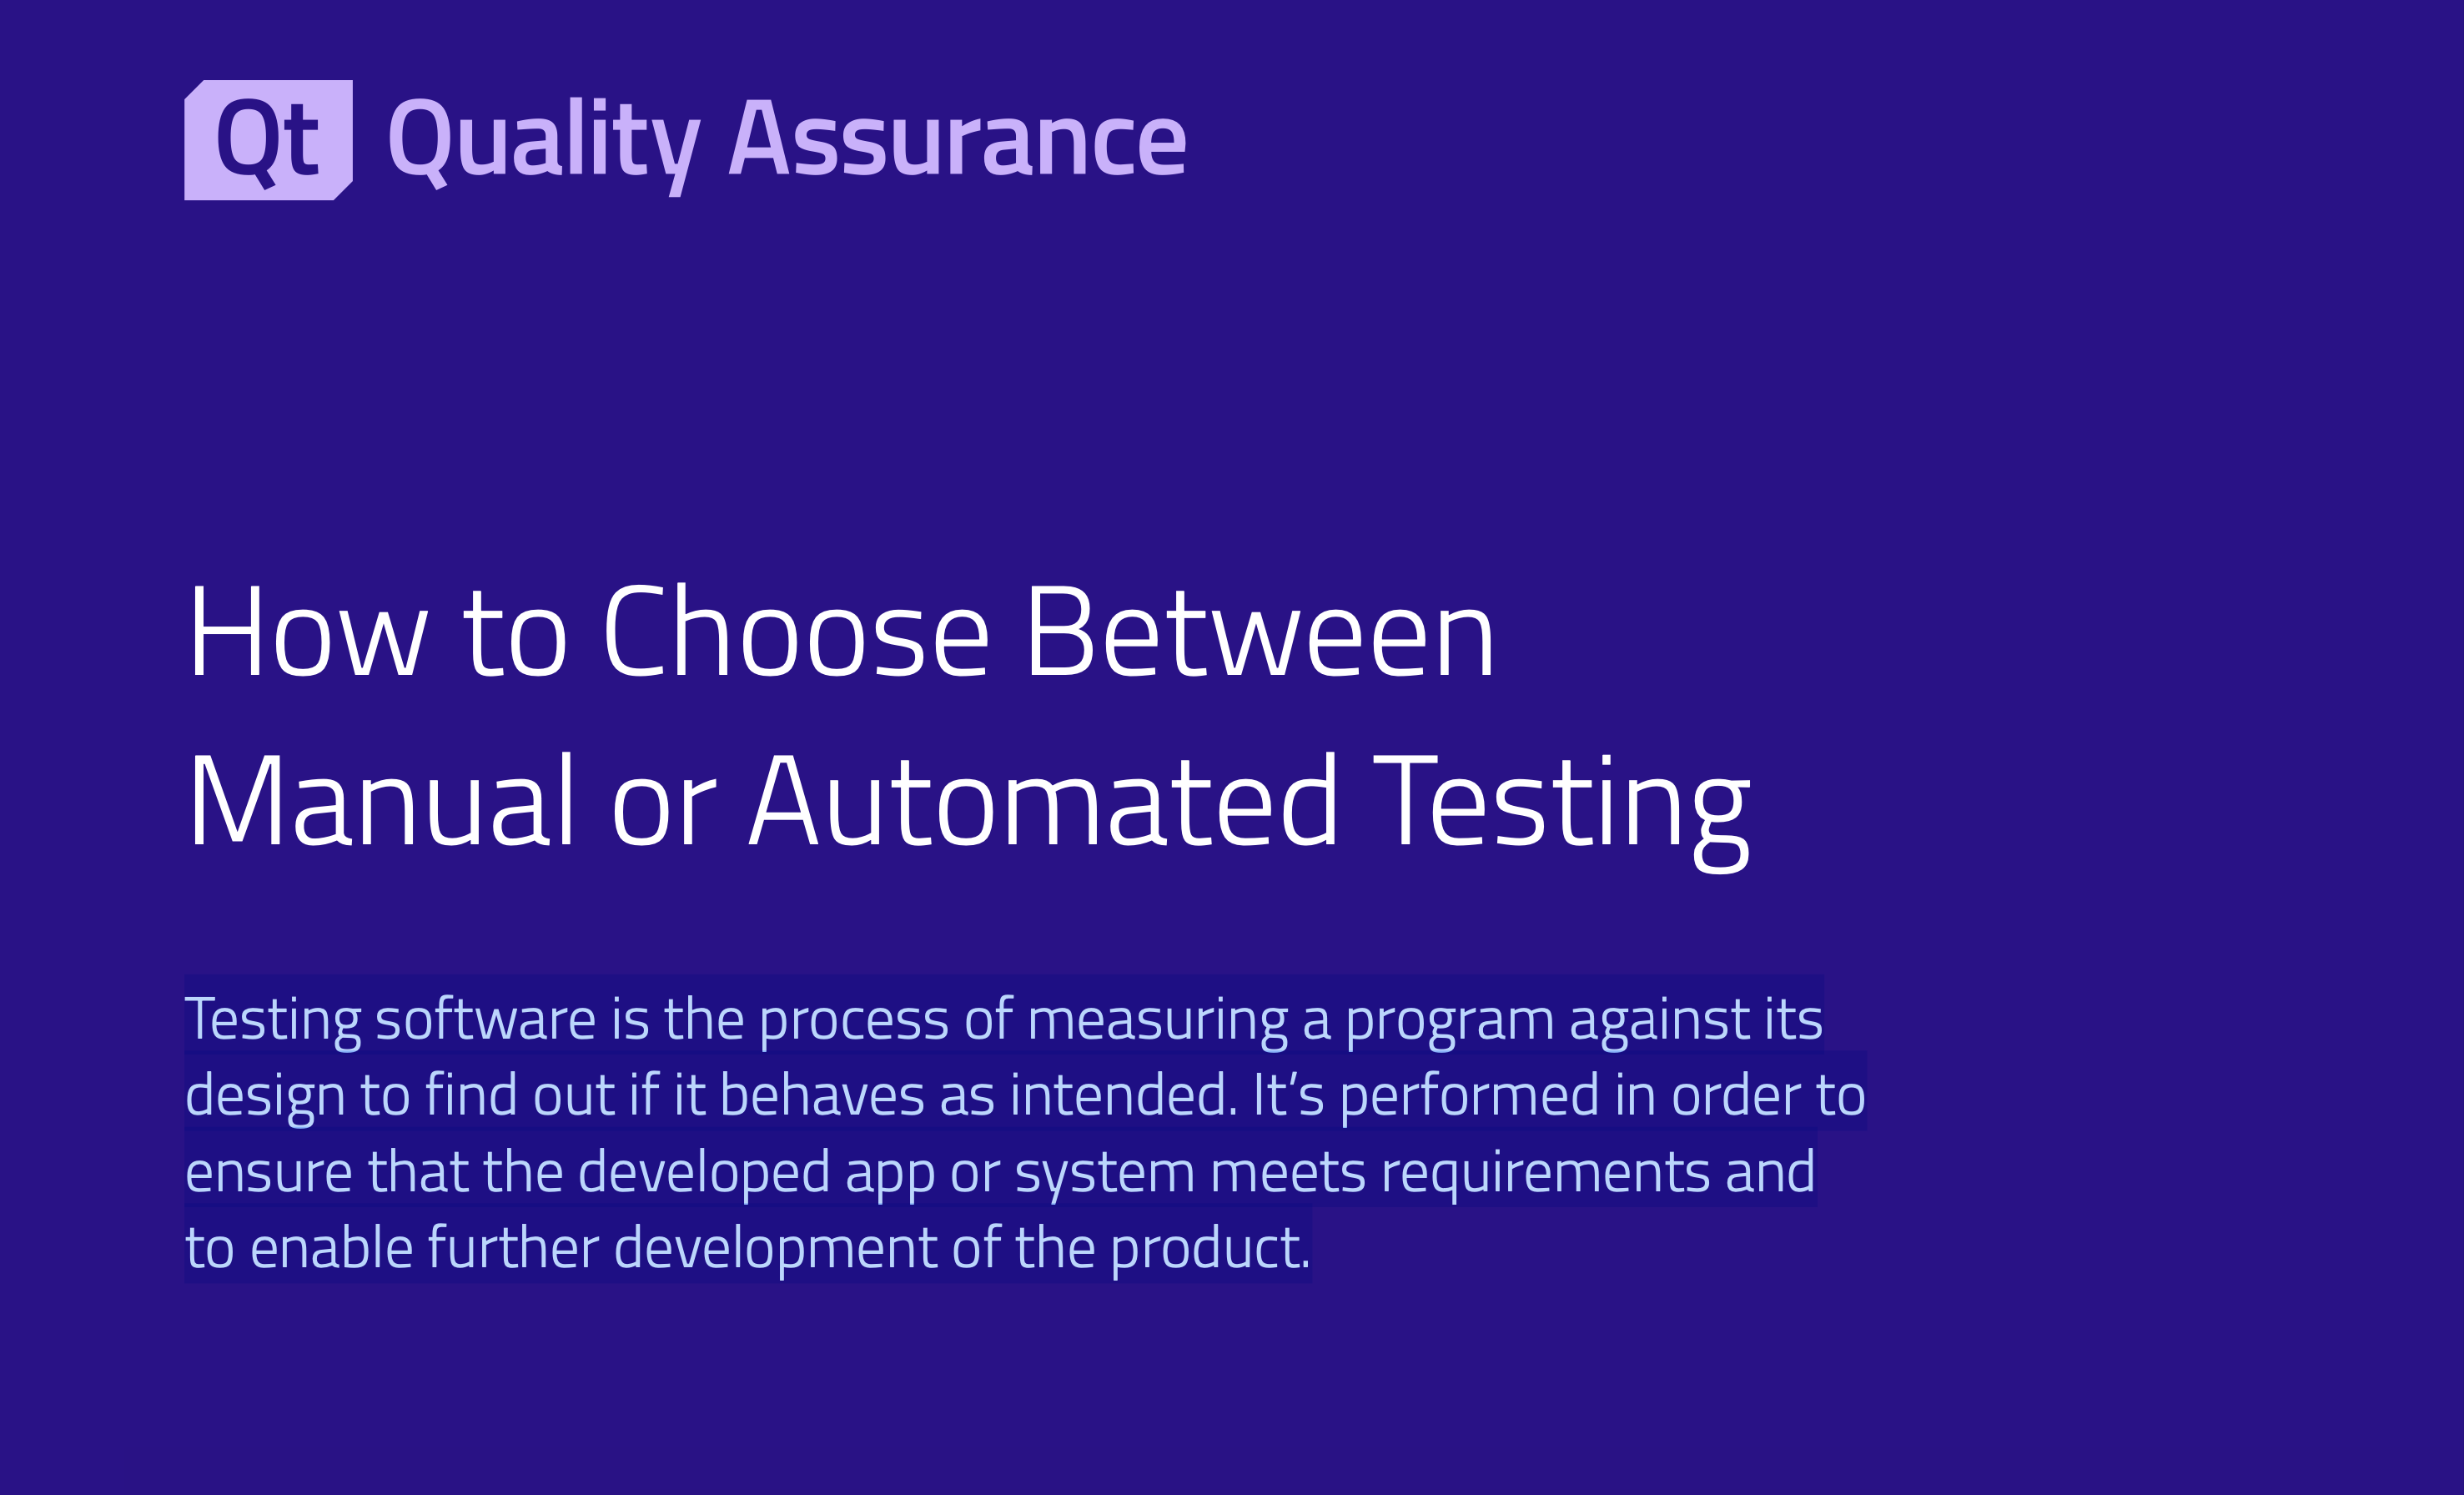 Manual vs Automated Testing